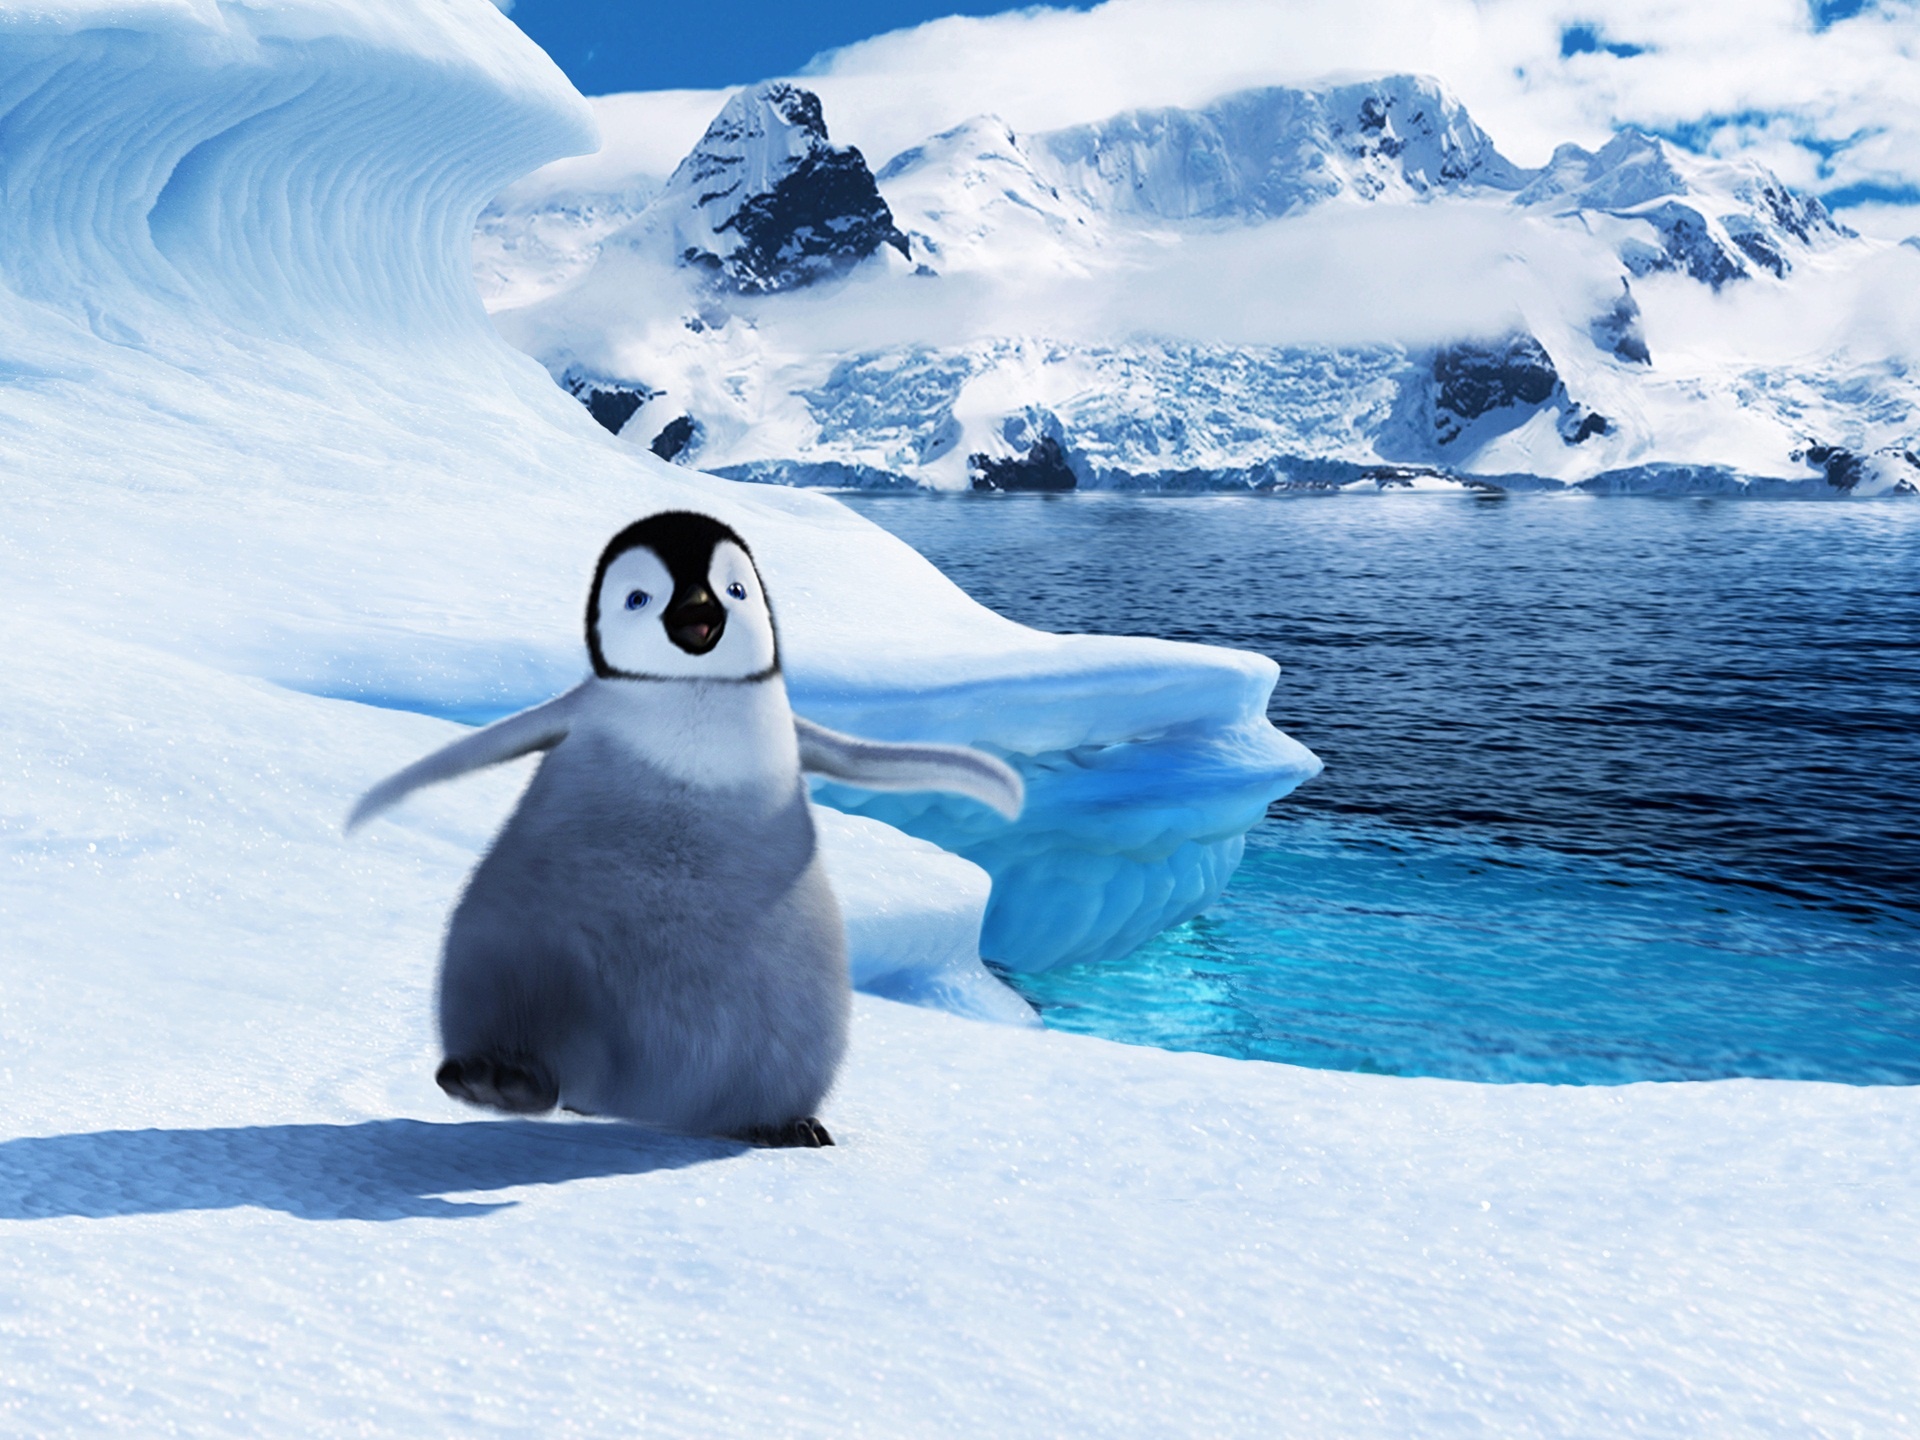 Happy Feet, HD wallpapers, Cute penguins, Colorful backgrounds, 1920x1440 HD Desktop